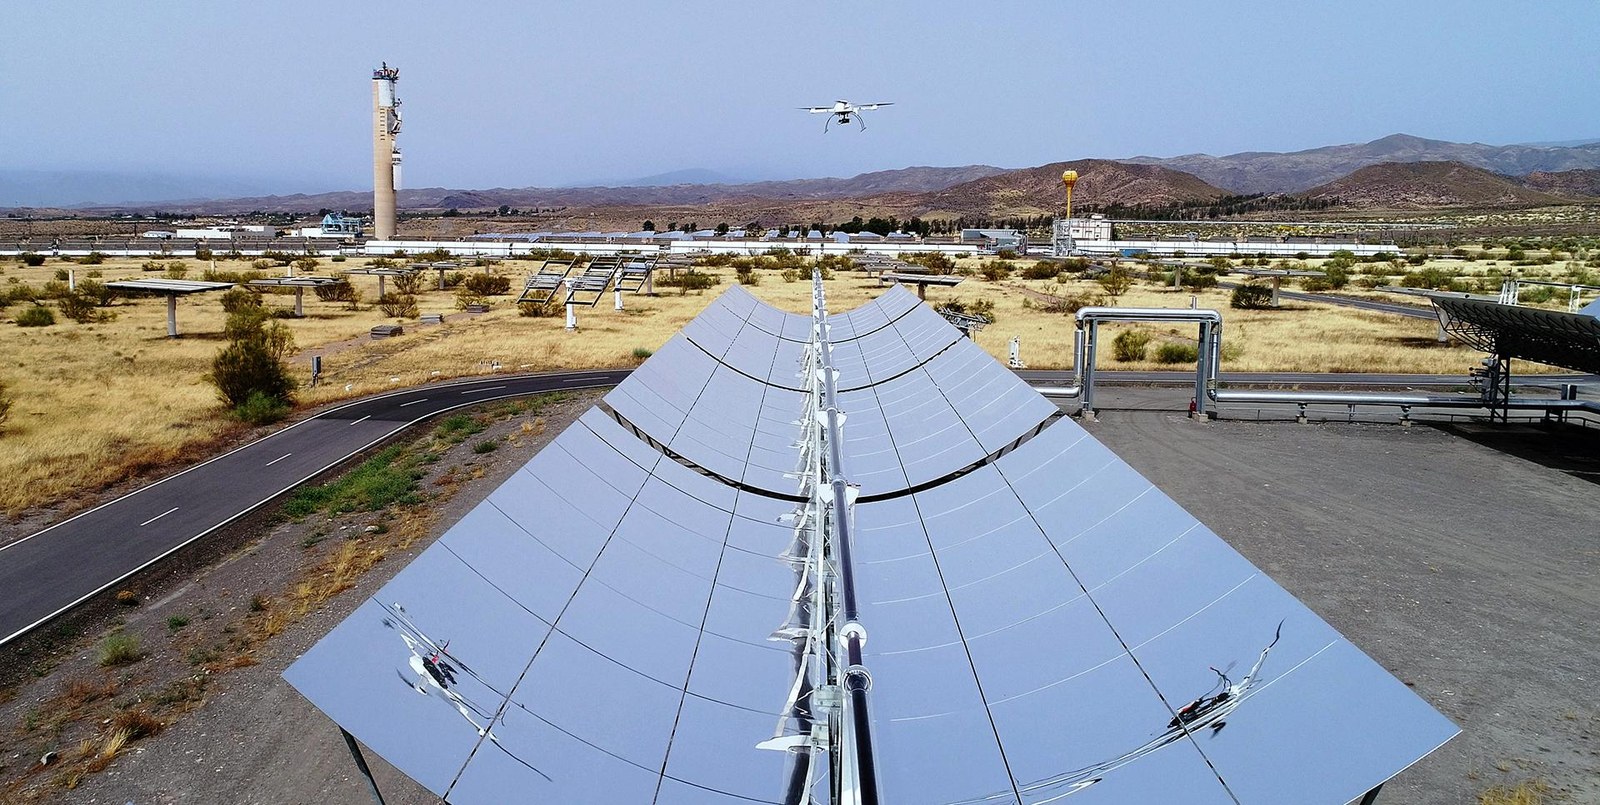 The quadrocopter of the QFly measurement system over a parabolic trough of the Plataforma Solar de Almería (PSA)